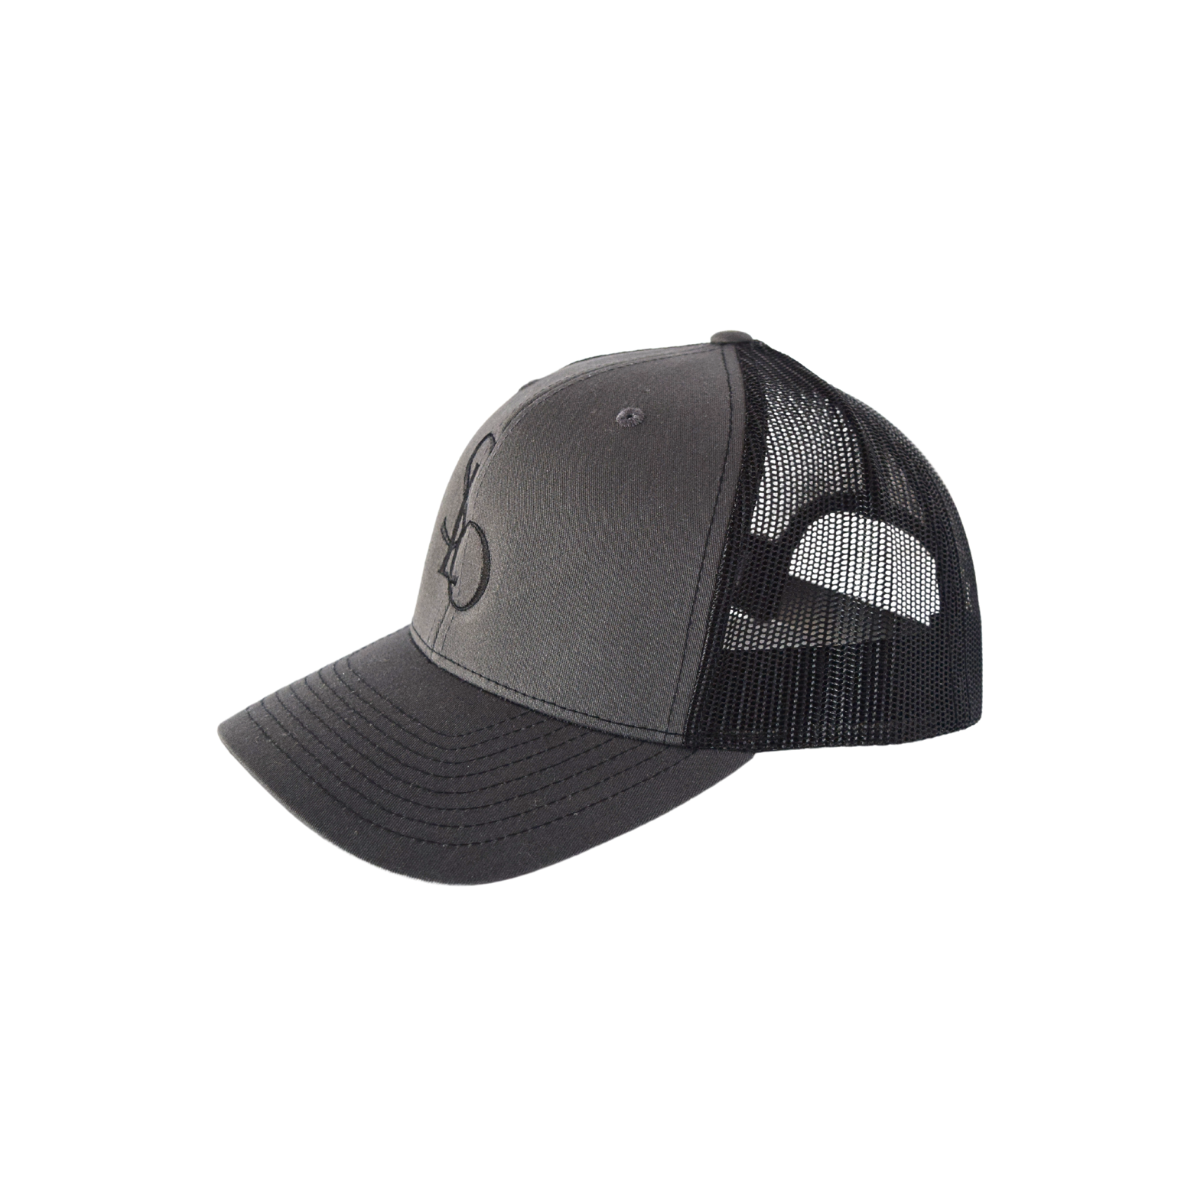 Branded SLO Designer-Inspired Baseball Hat in Charcoal & Black